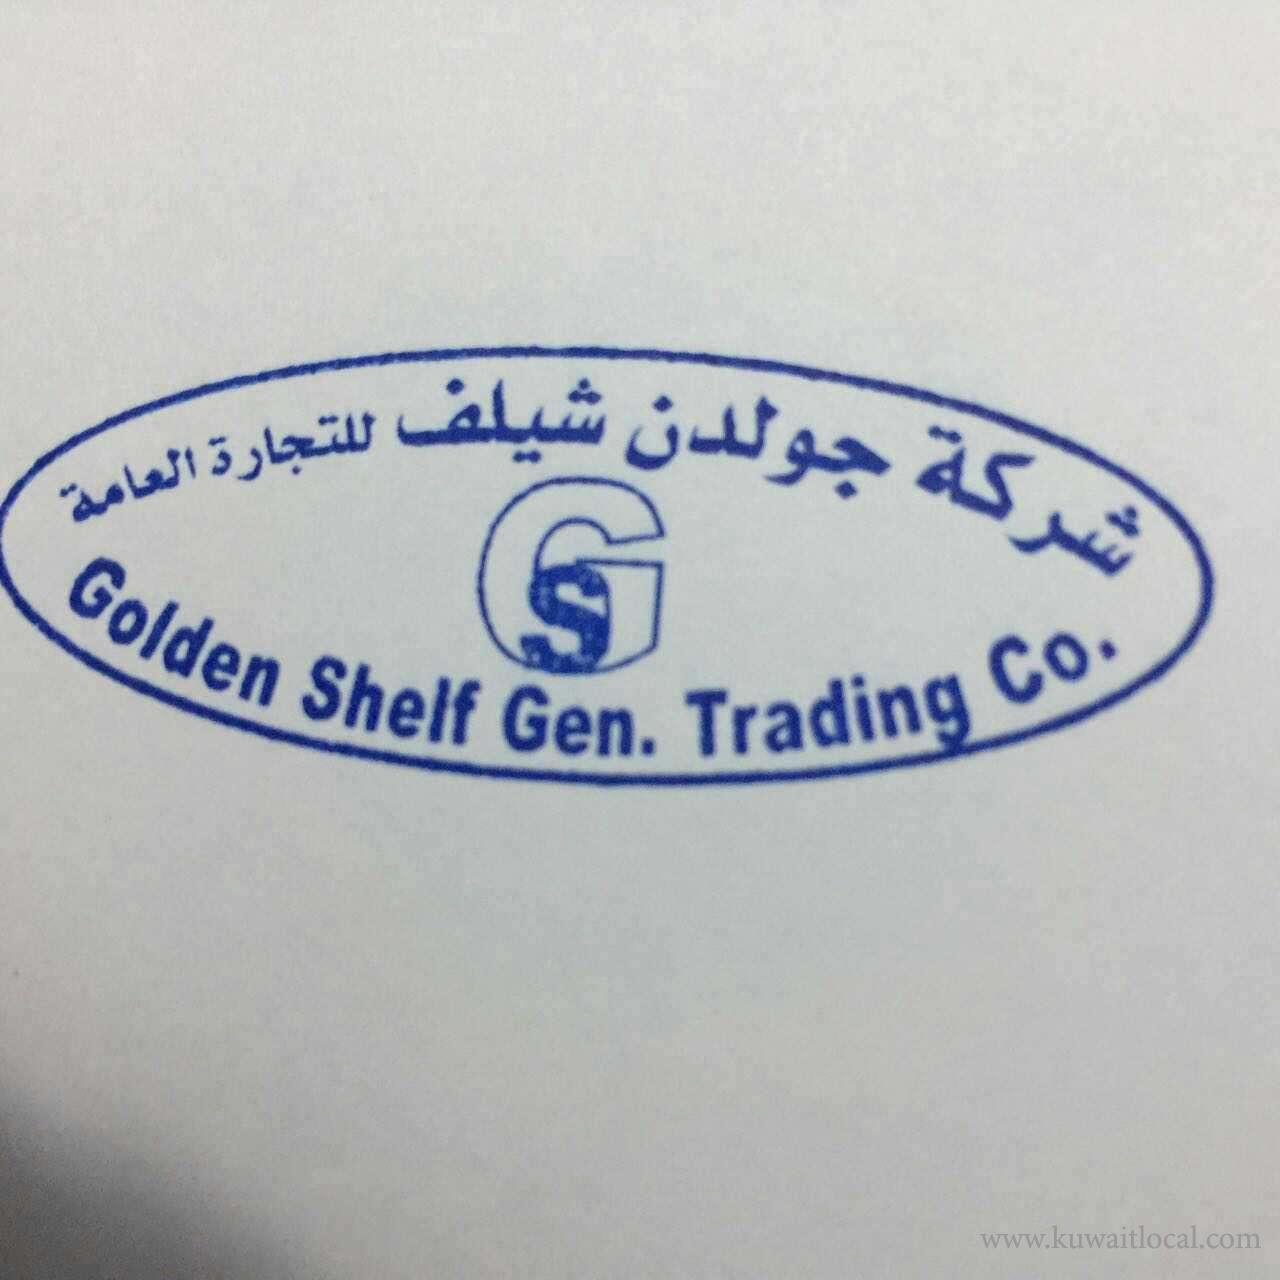 golden-shelf-general-trading-company-kuwait